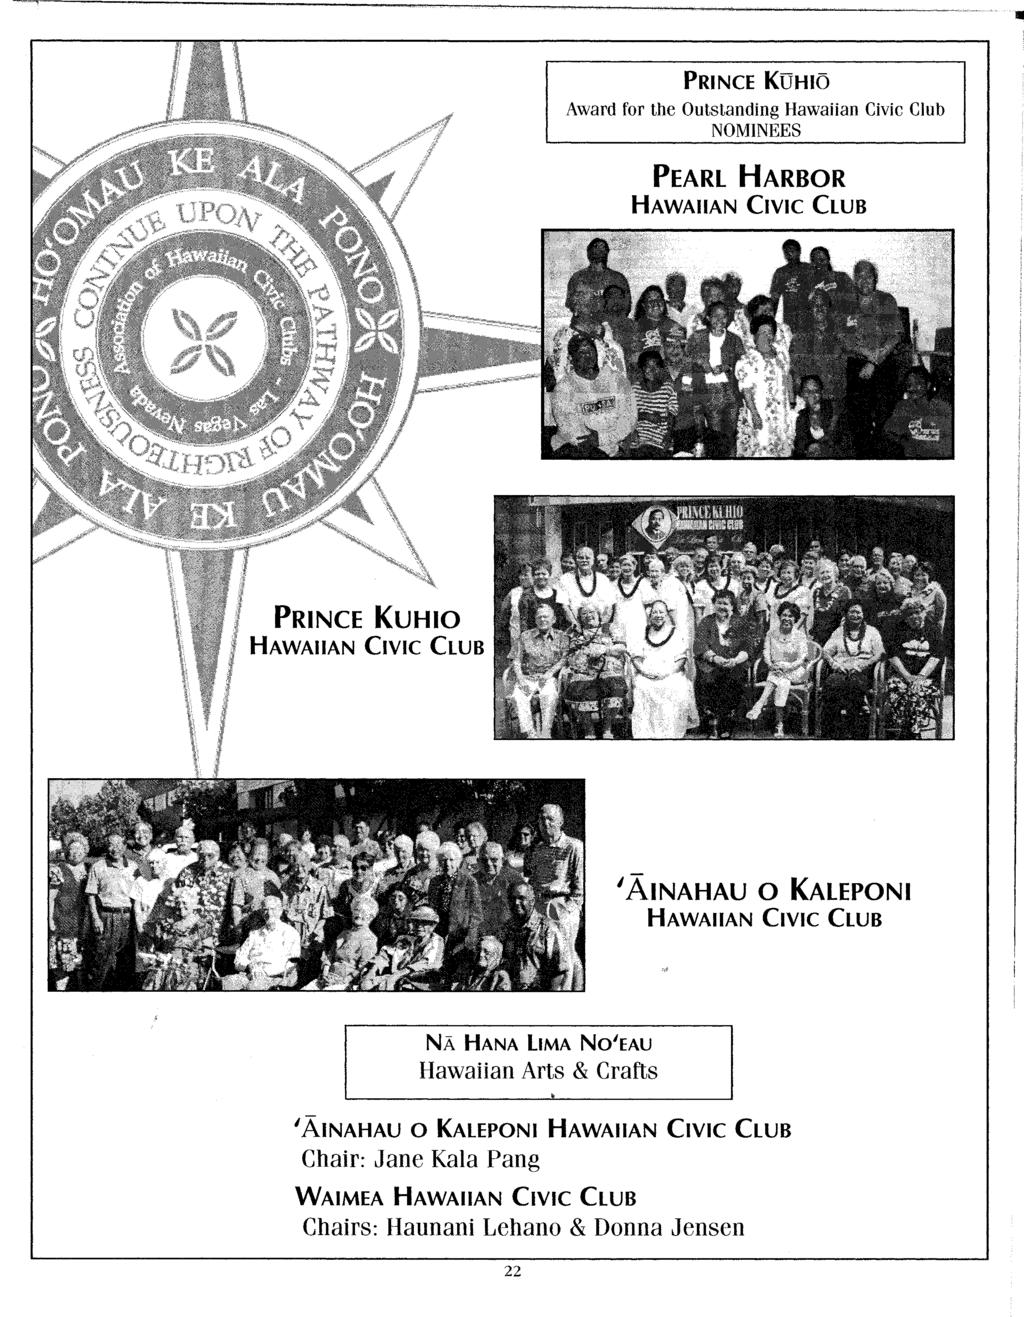 PRINCE KUHIC> Award for the Outstanding Hawaiian Civic Club NOMINEES PEARL HARBOR HAWAIIAN CIVIC CLUB PRINCE KUHIO HAWAIIAN CIVIC CLUB KALEPONI HAWAIIAN CIVIC CLUB I AINAHAU